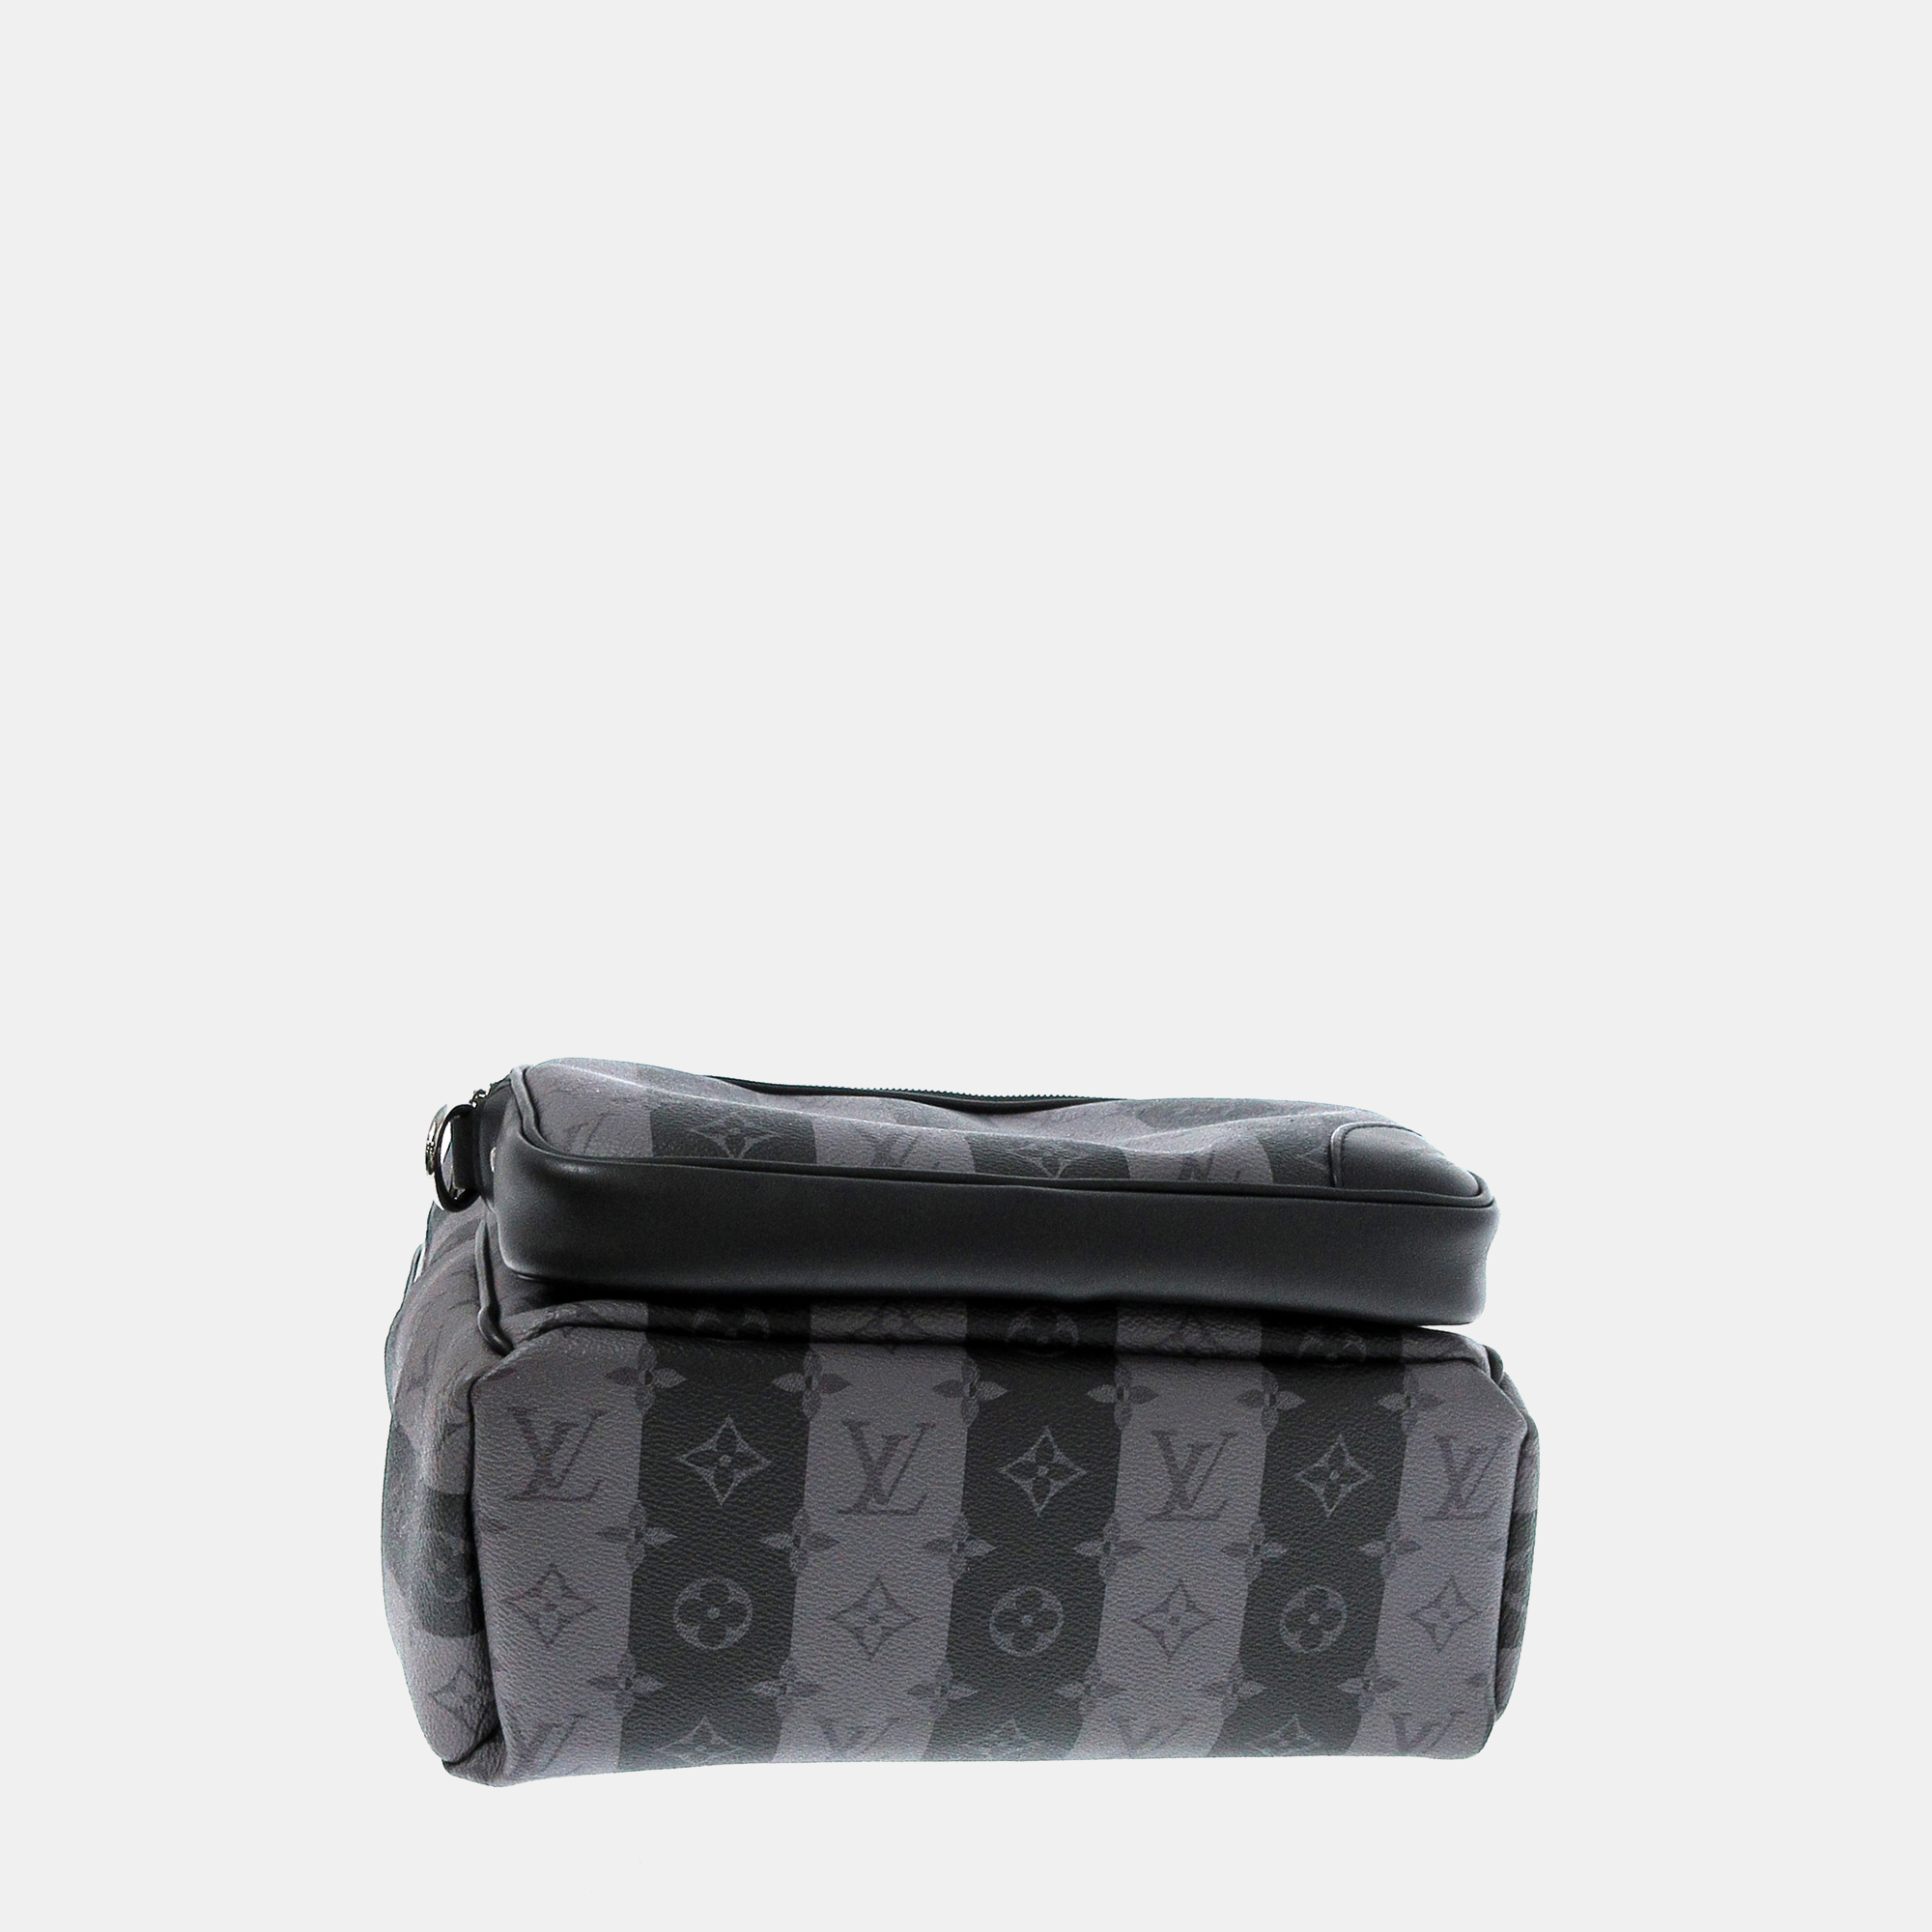 Louis Vuitton X Nigo  Black/Grey Monogram Eclipse Stripes Heart Modular Utilitary Backpack